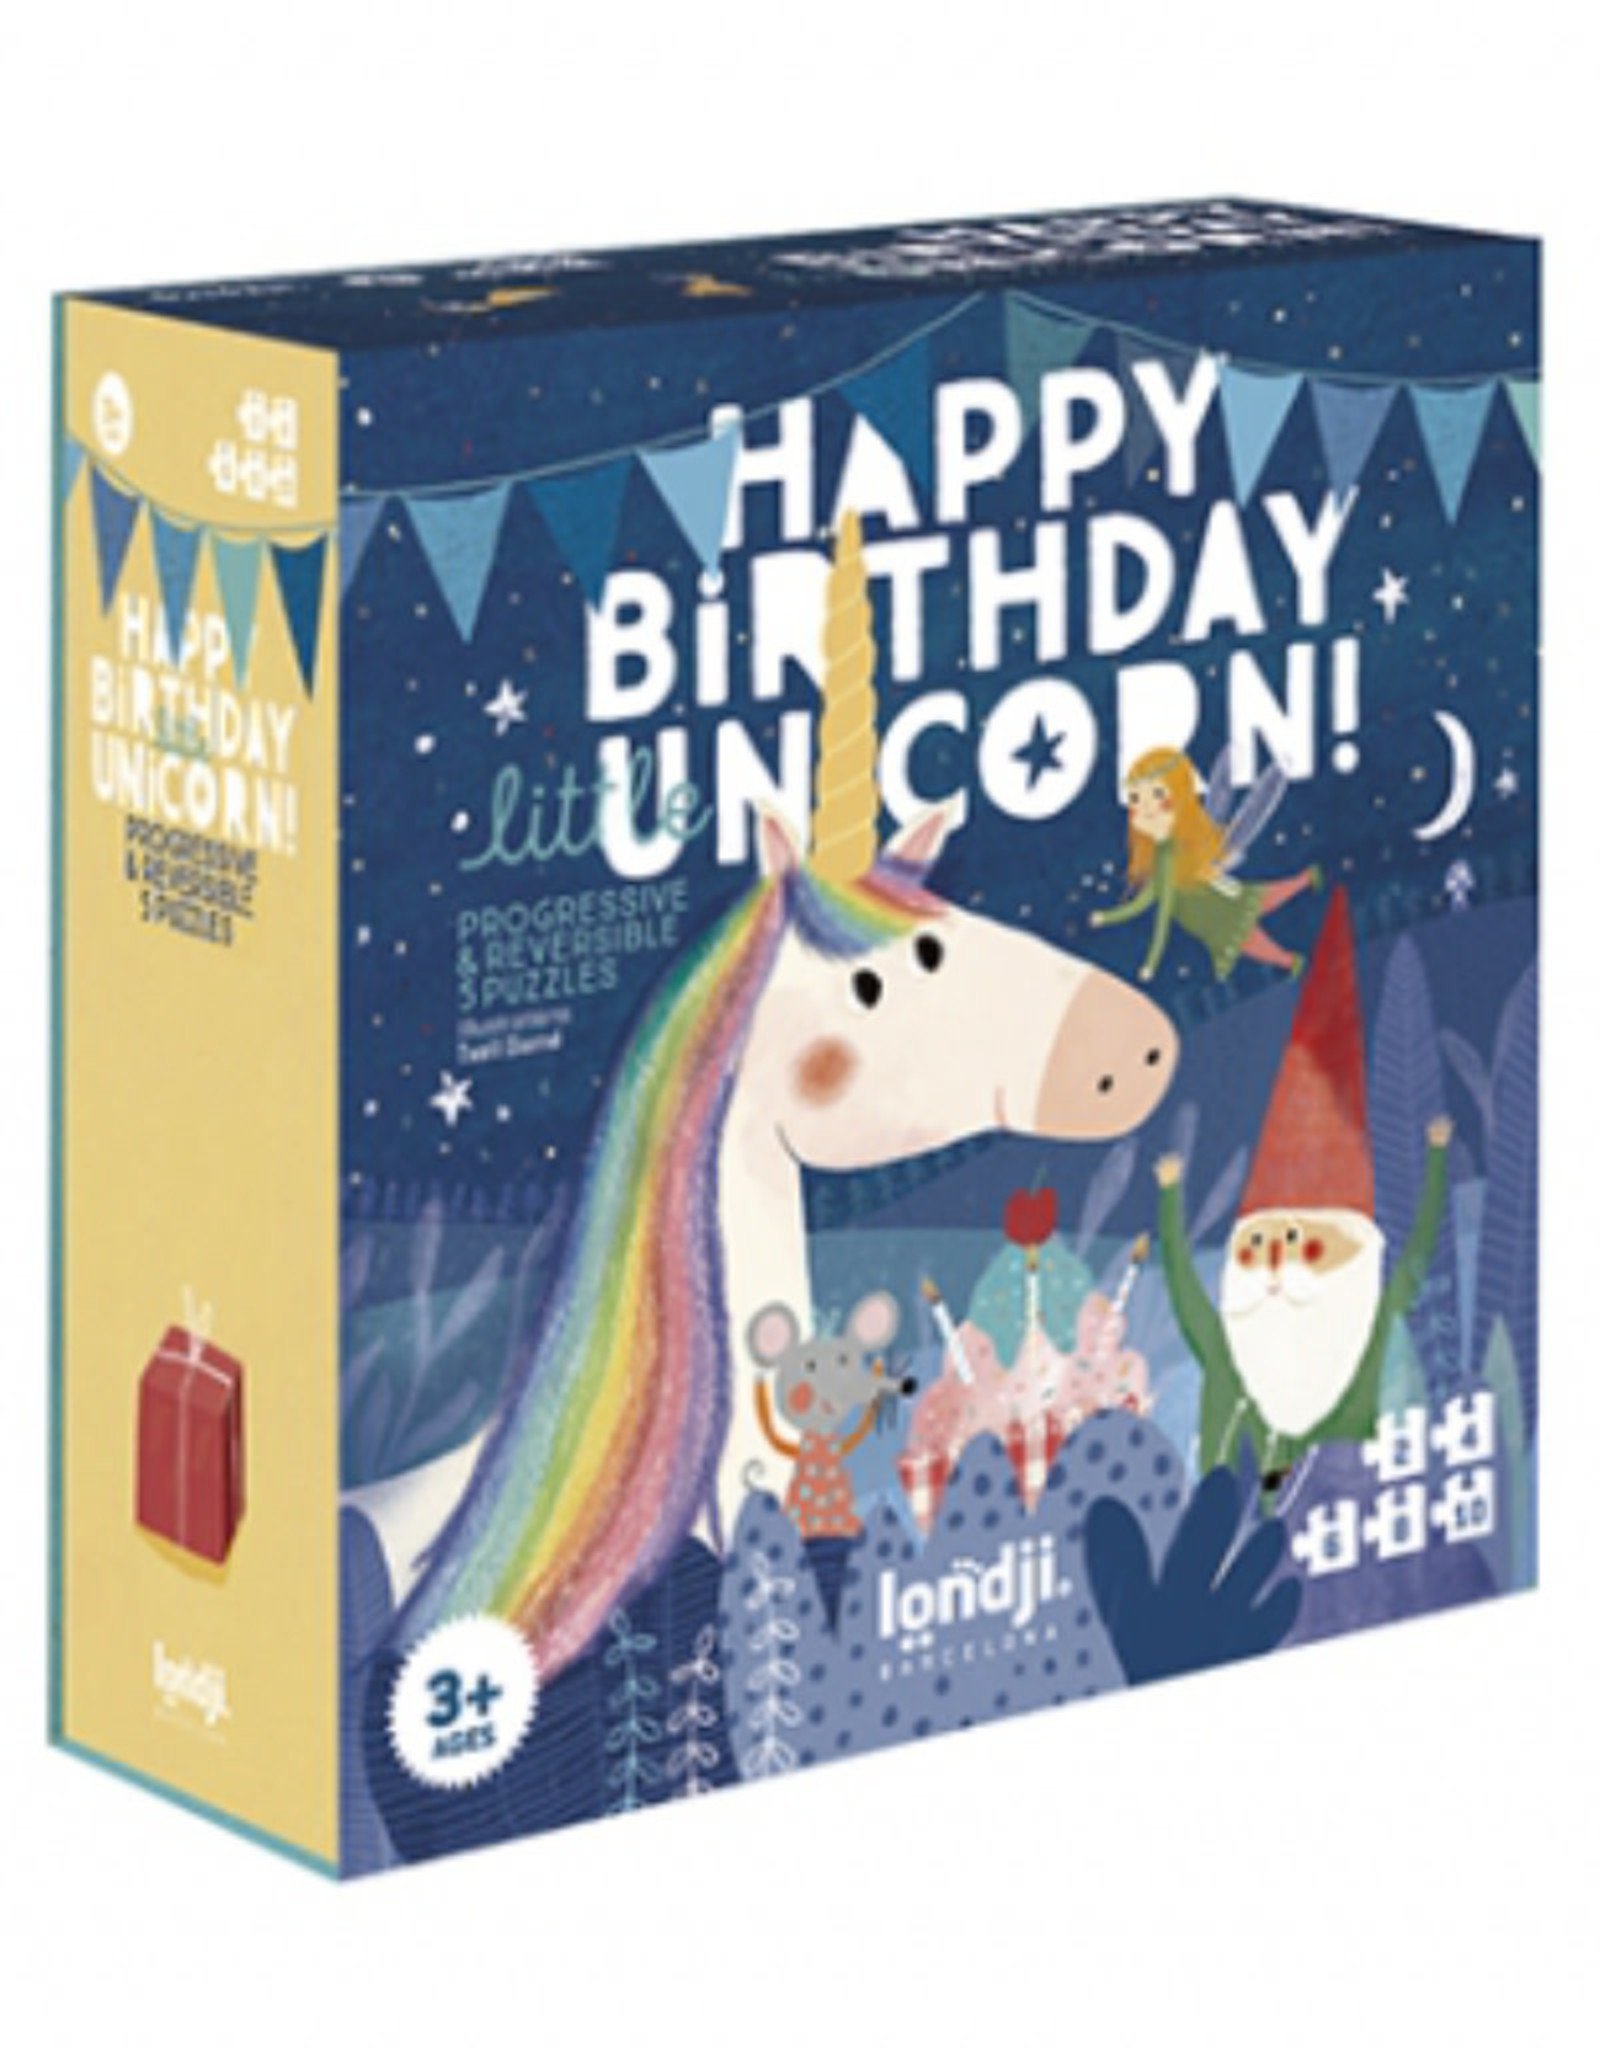 Londji Happy Birthday Unicorn!